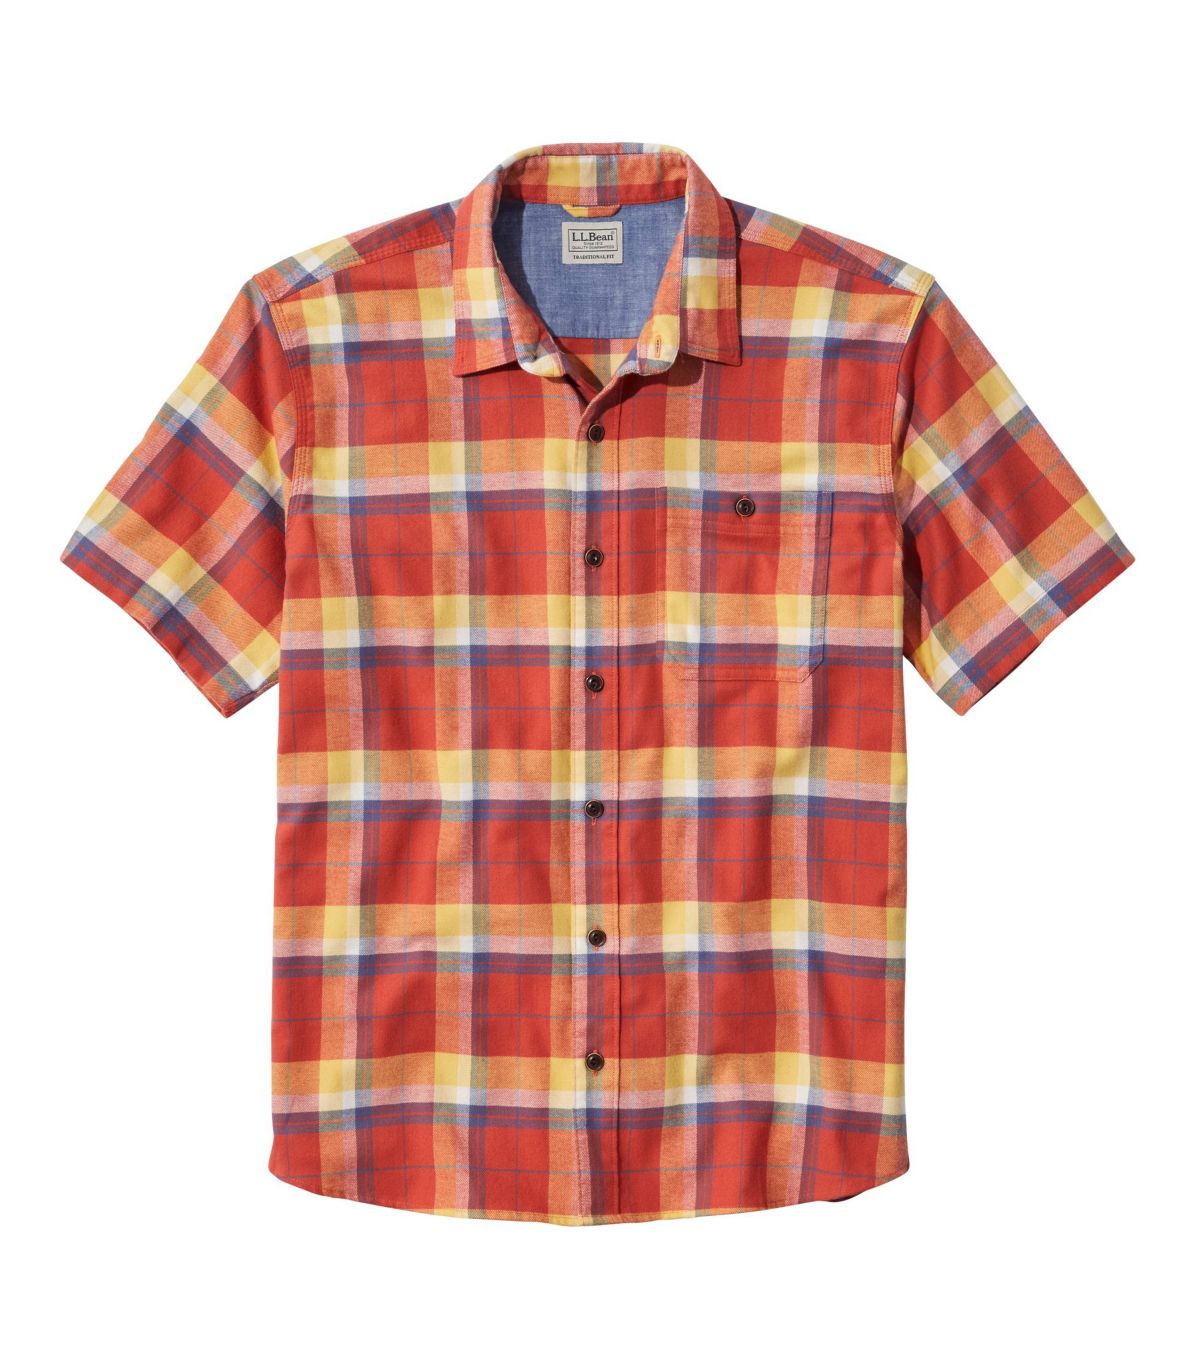 Men's BeanFlex® All-Season Flannel Shirt, Traditional Untucked Fit, Short-Sleeve